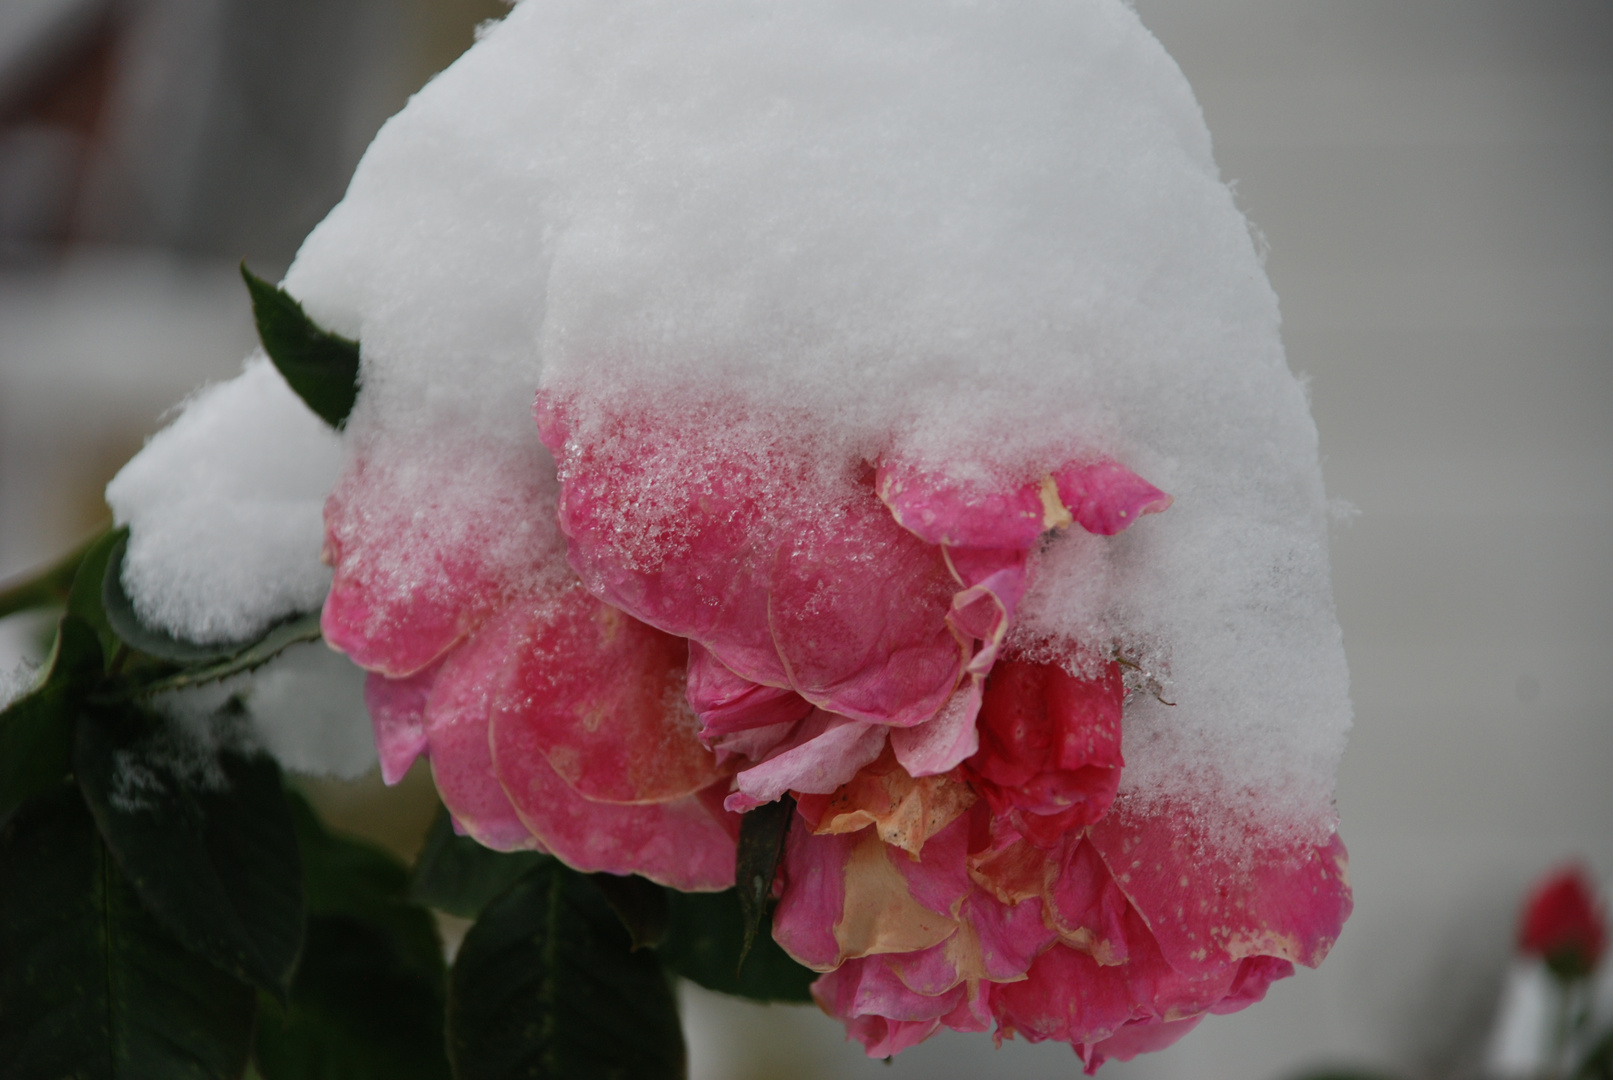 Cold rose